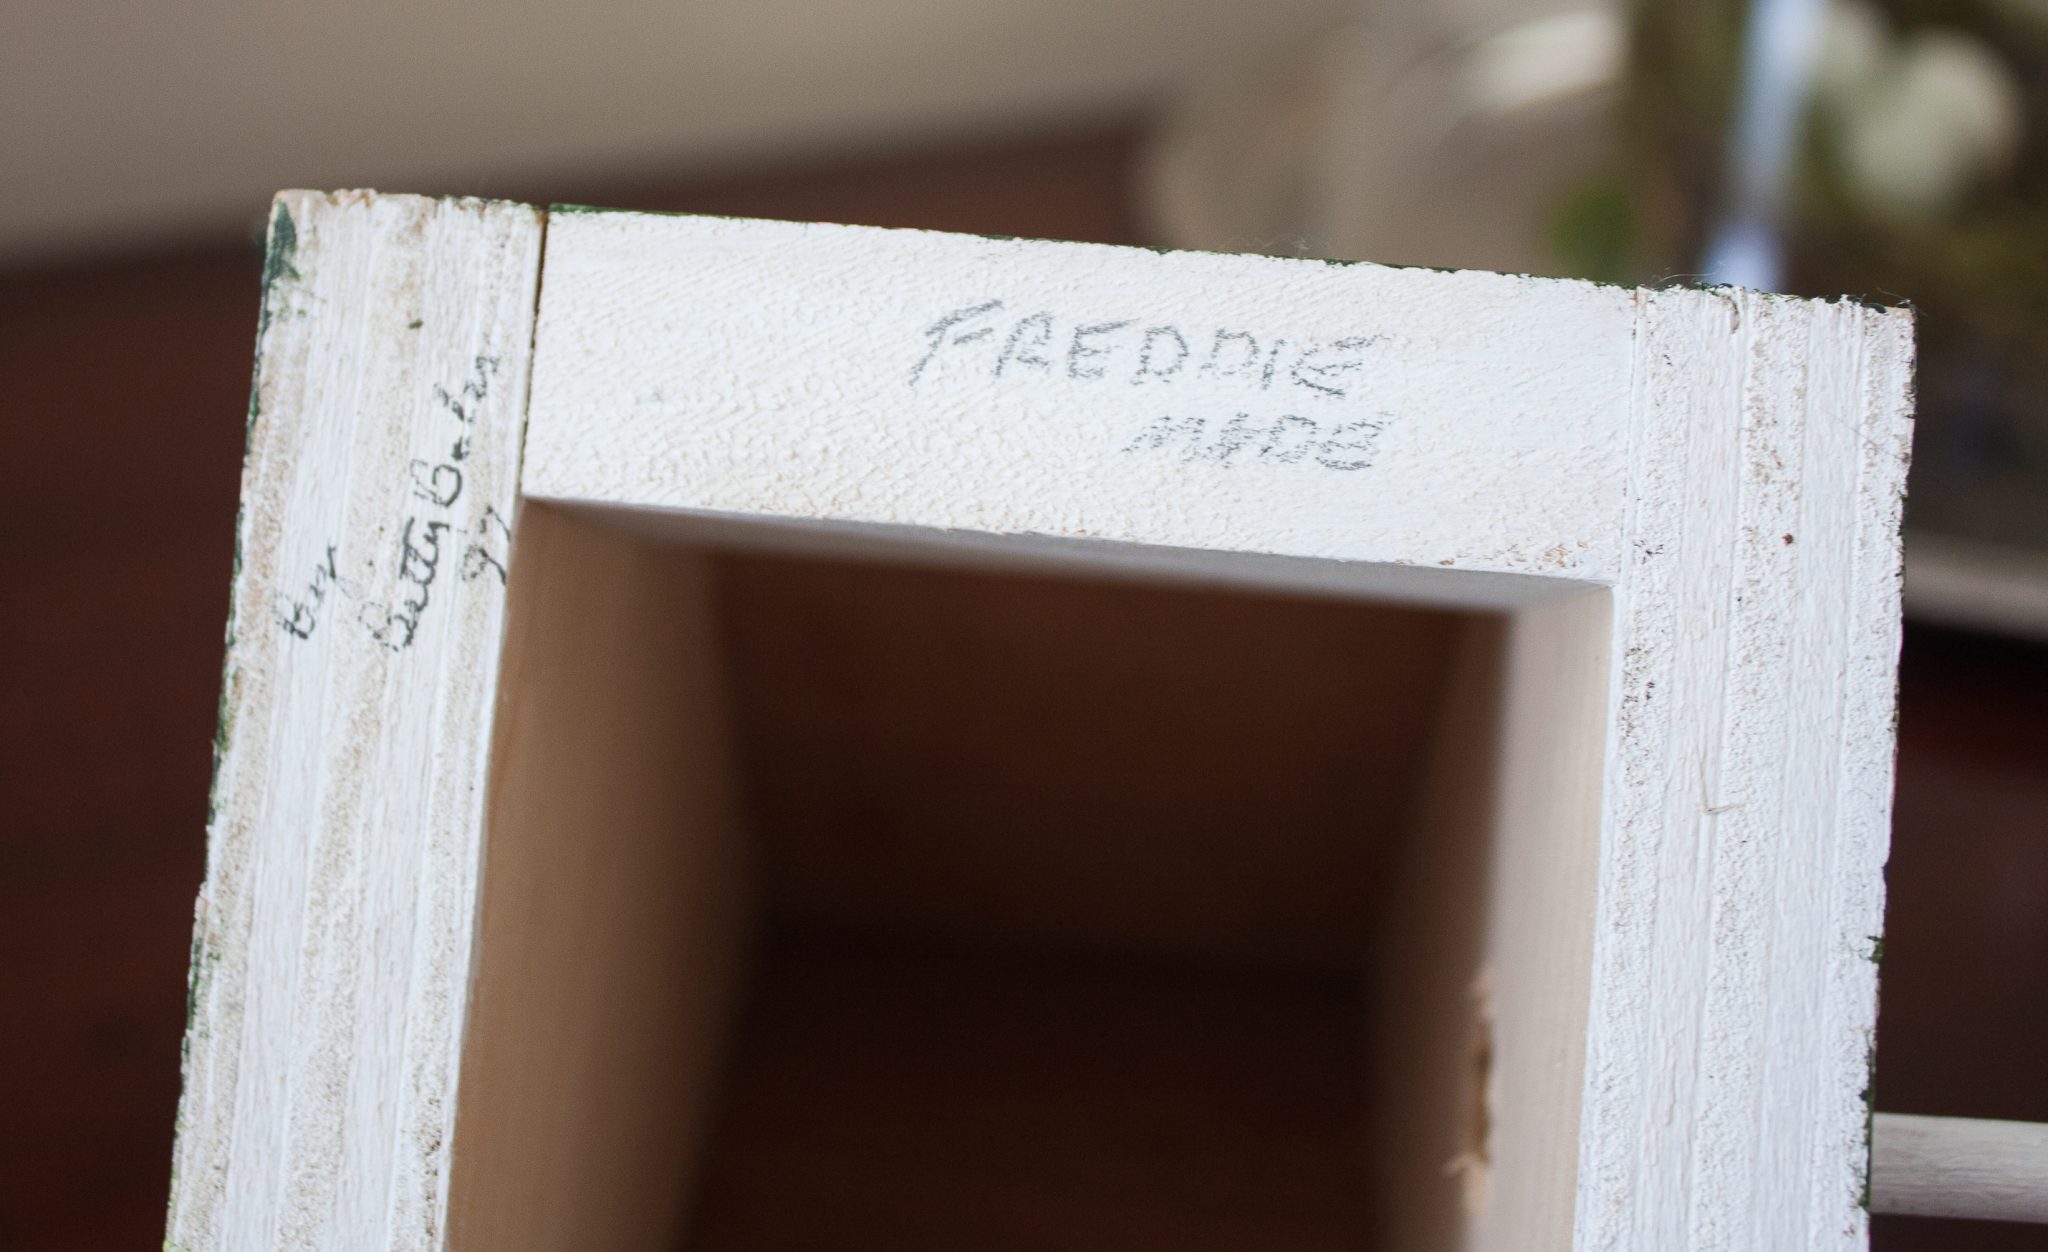 Writing on the bottom of a handmade birdhouse